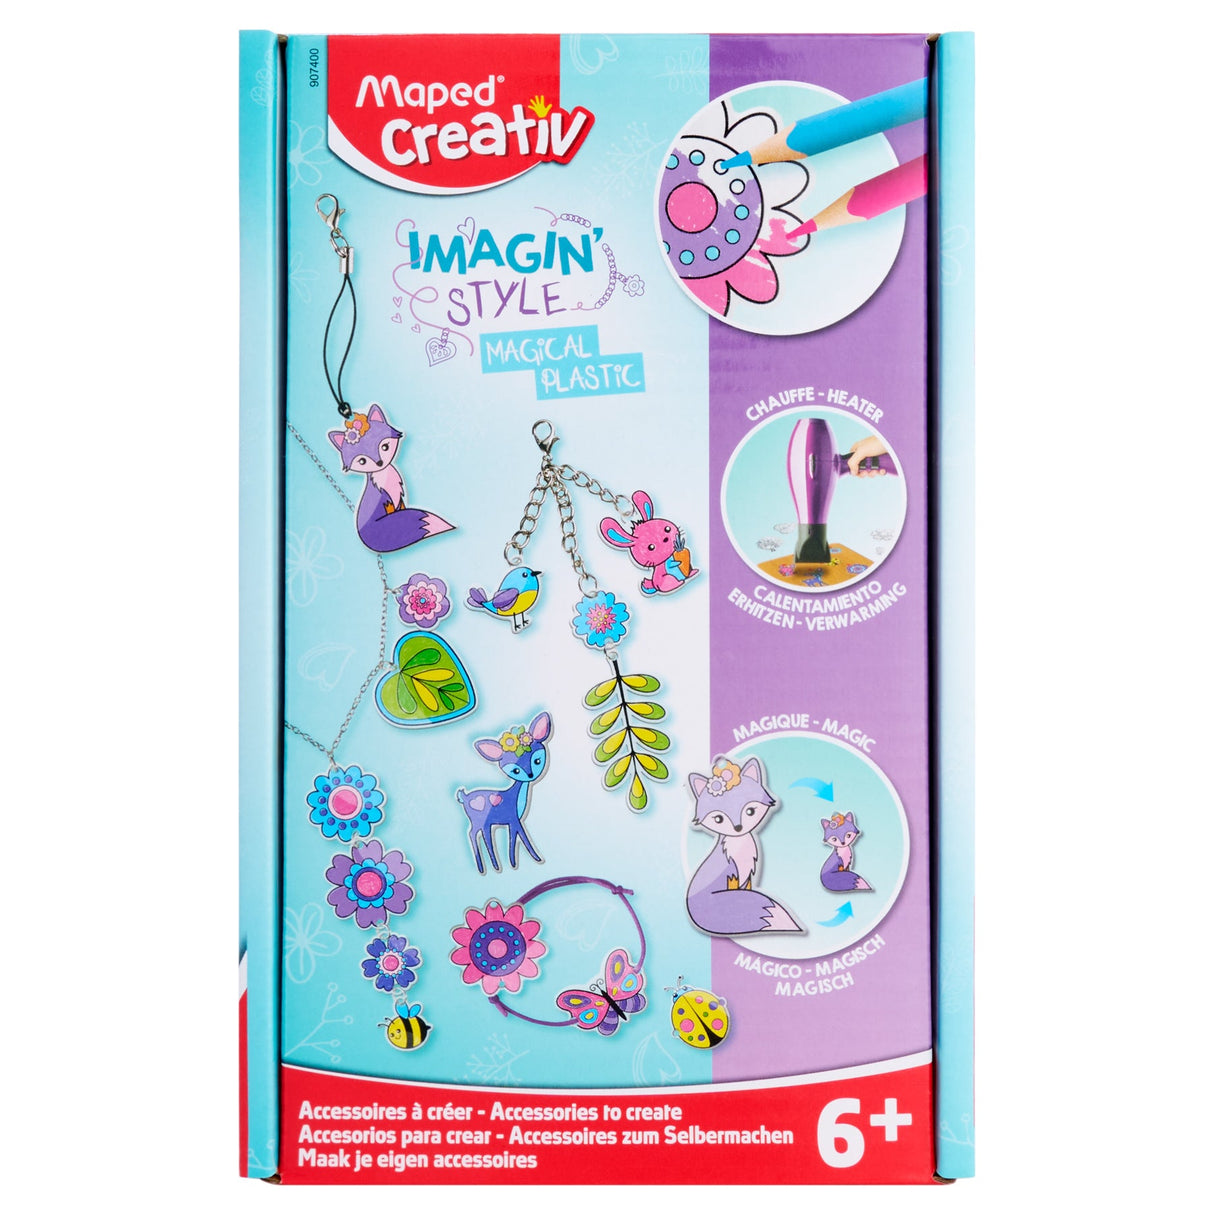 Maped Imagin' Style Magical Plastic-Kids Art Sets-Maped|StationeryShop.co.uk